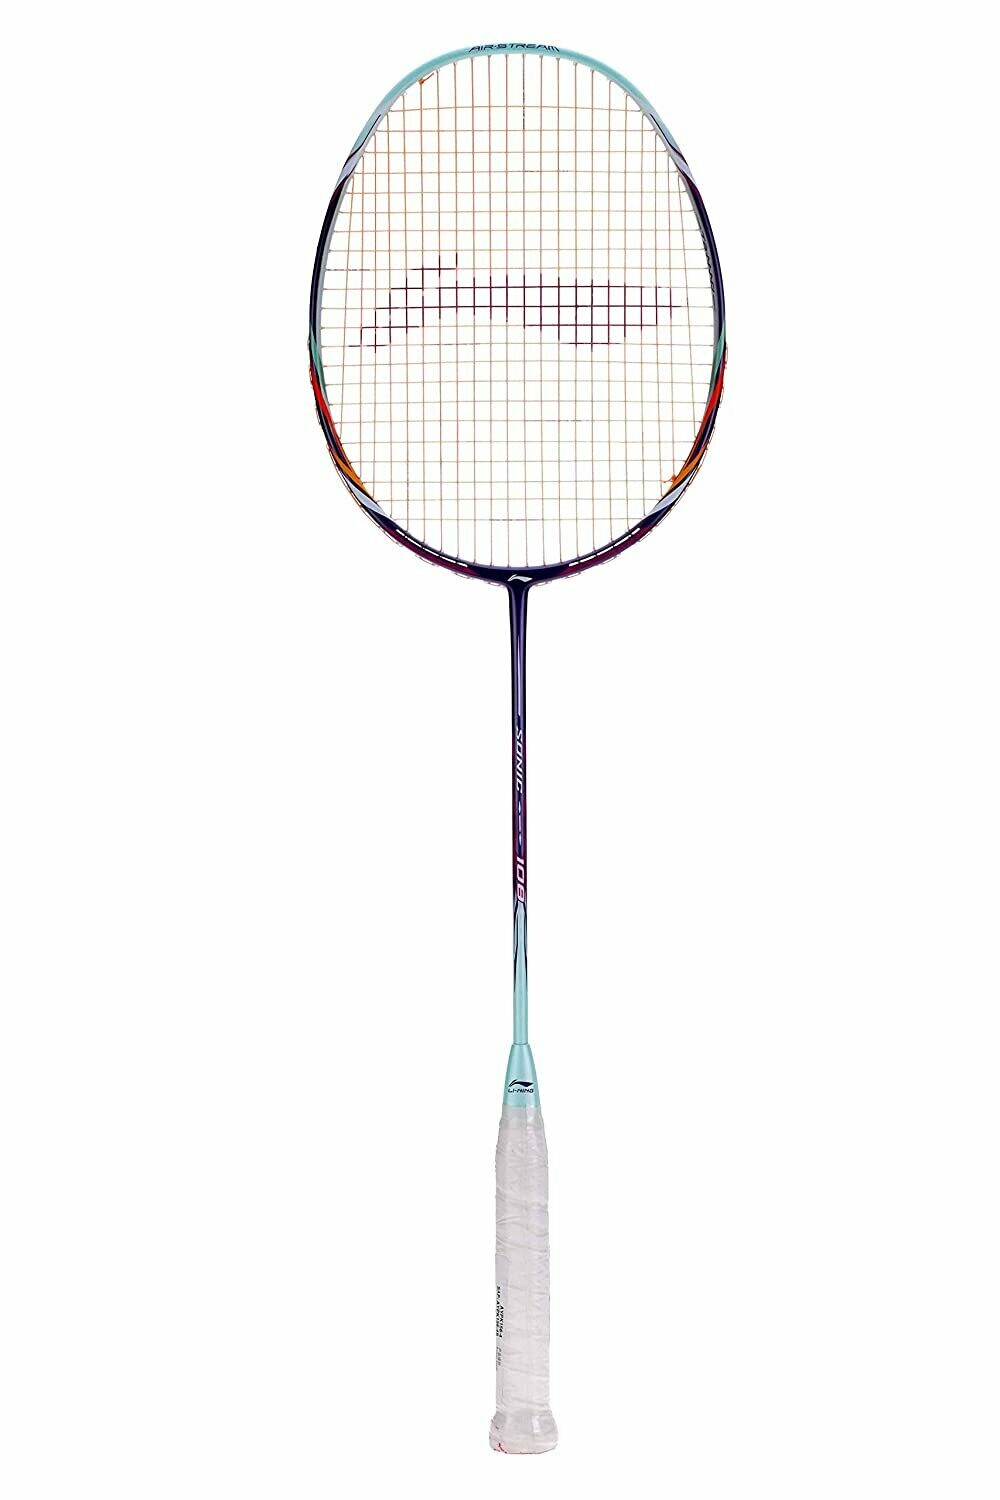 LI-NING Sonic 108 Carbon Fiber Badminton Racquet